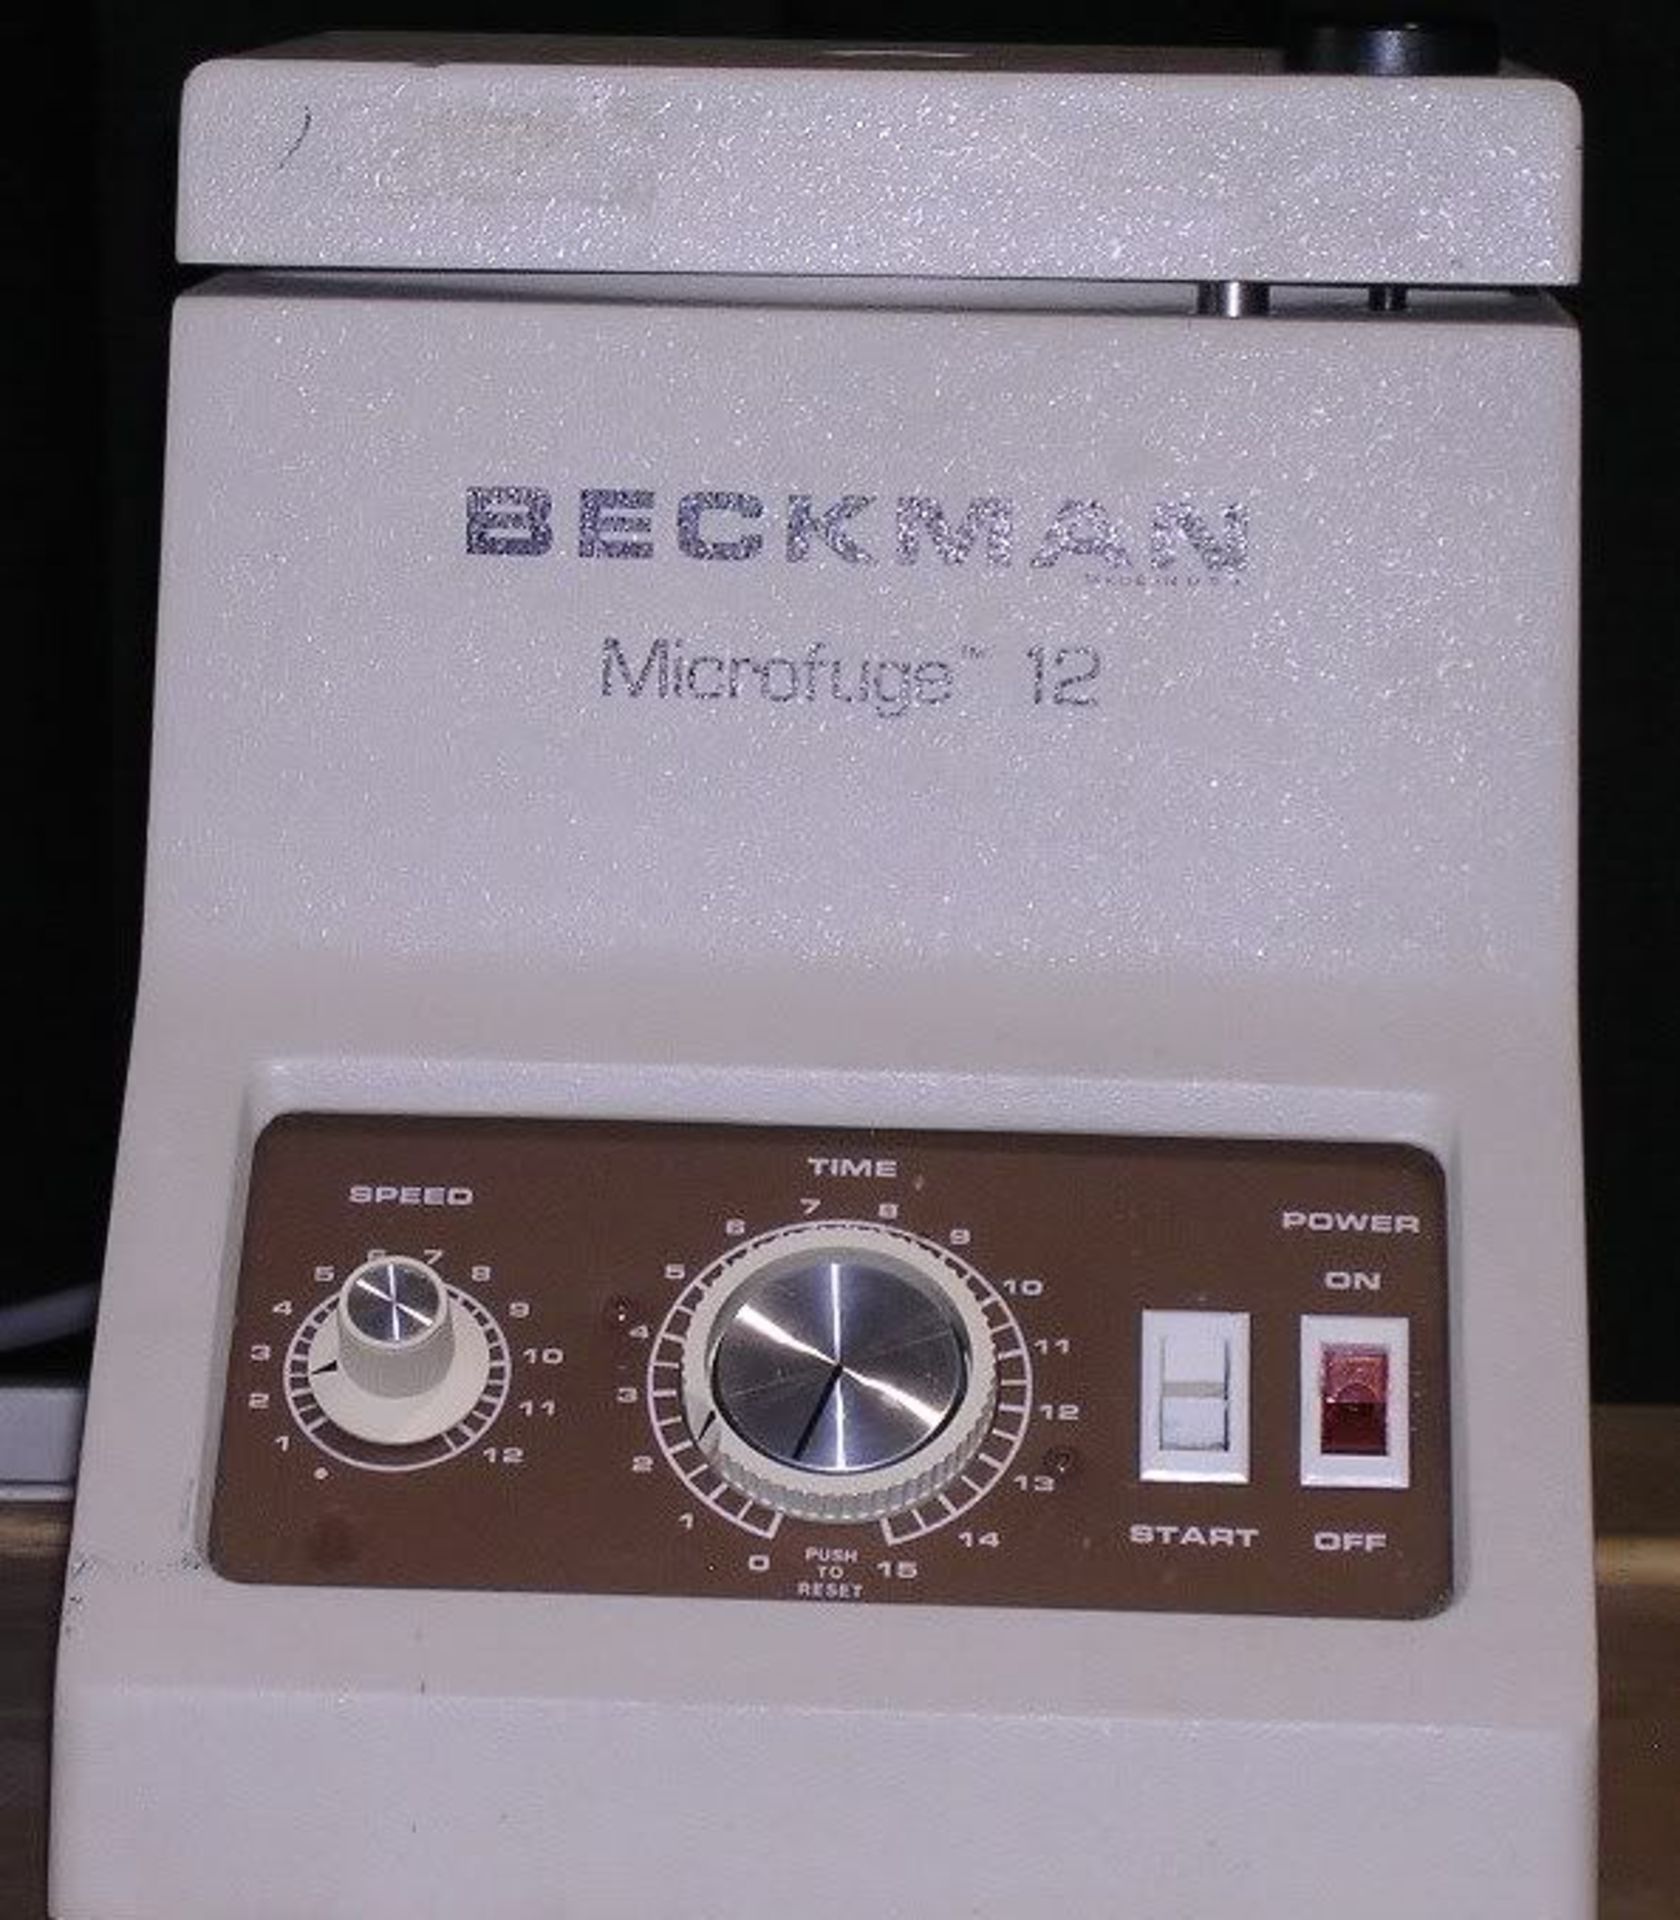 Beckman, Microfuge 12 Centrifuge, Qty 1, 320720410558